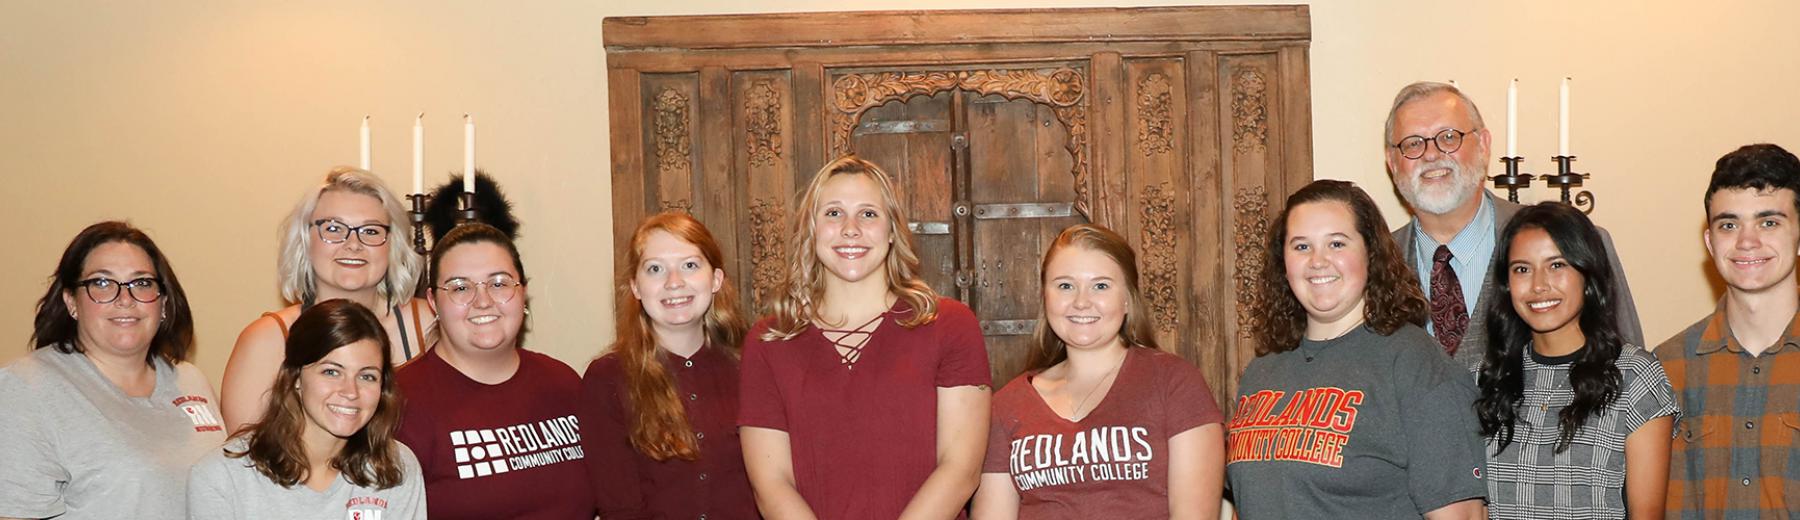 Redlands Scholarship Recipients